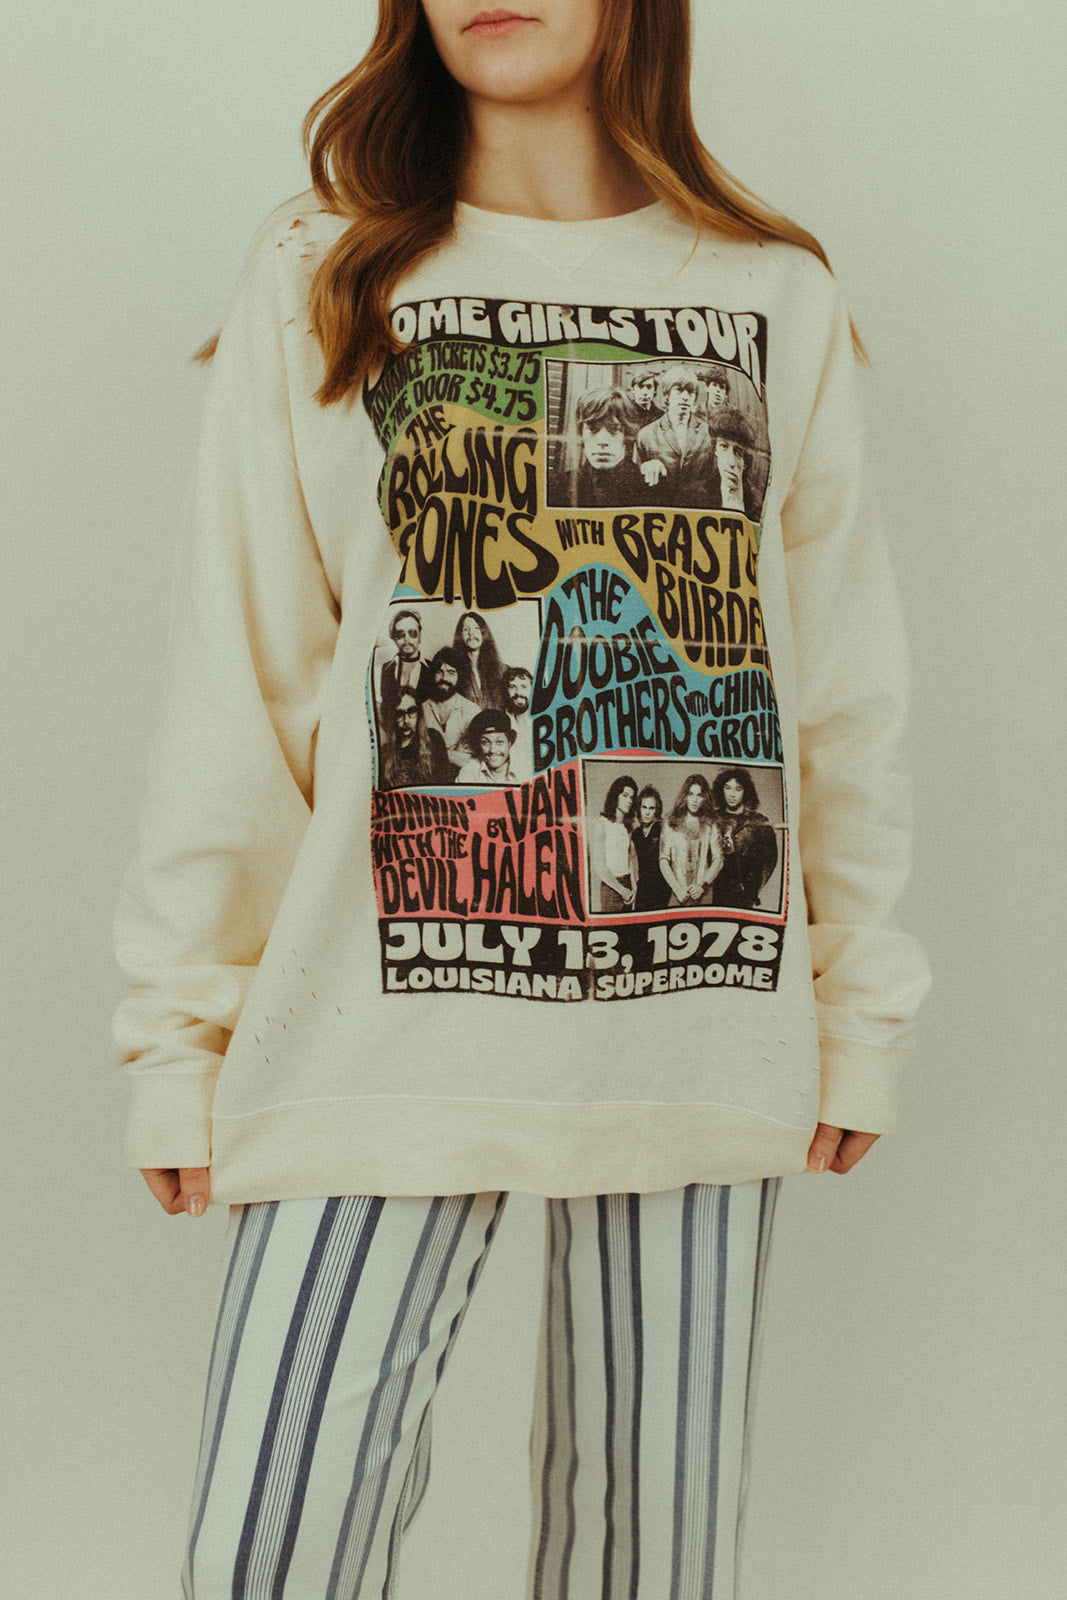 Some Girls Tour Sweatshirt